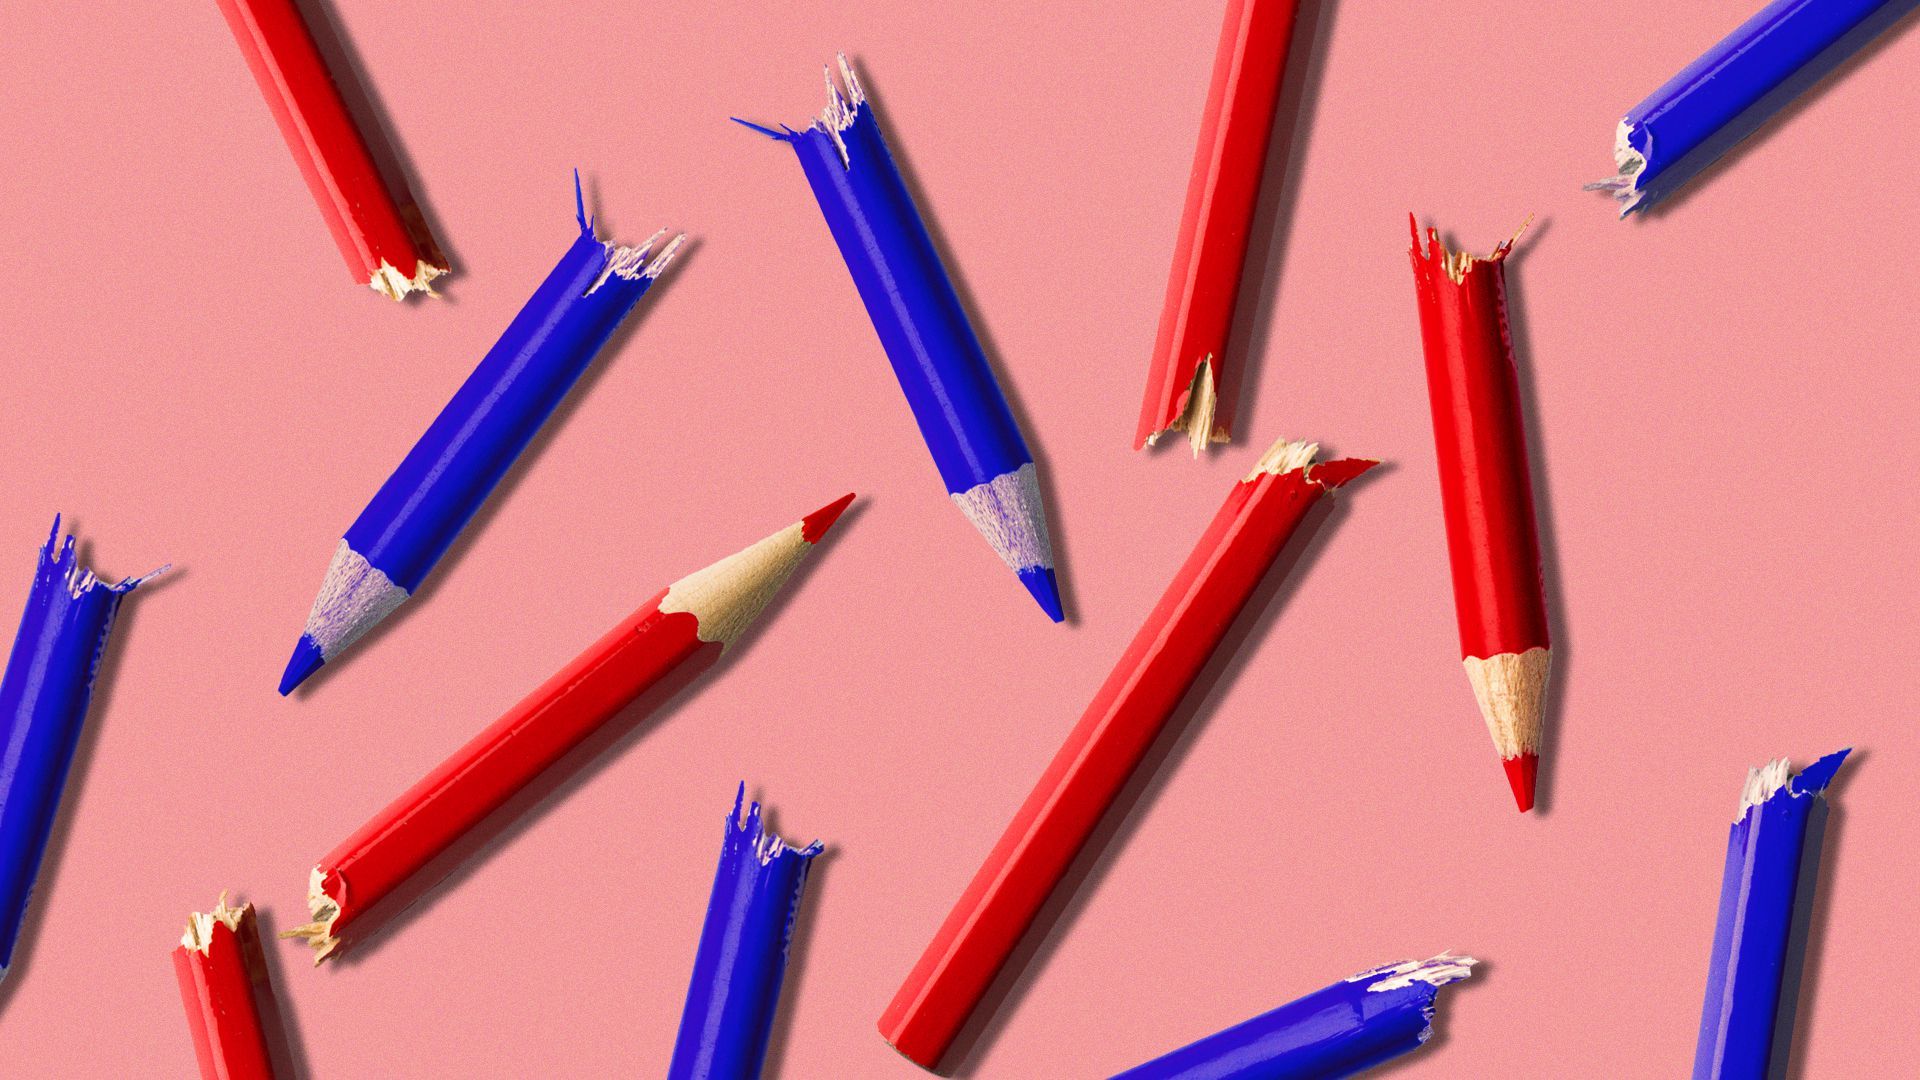 Illustration of red and blue broken pencils.